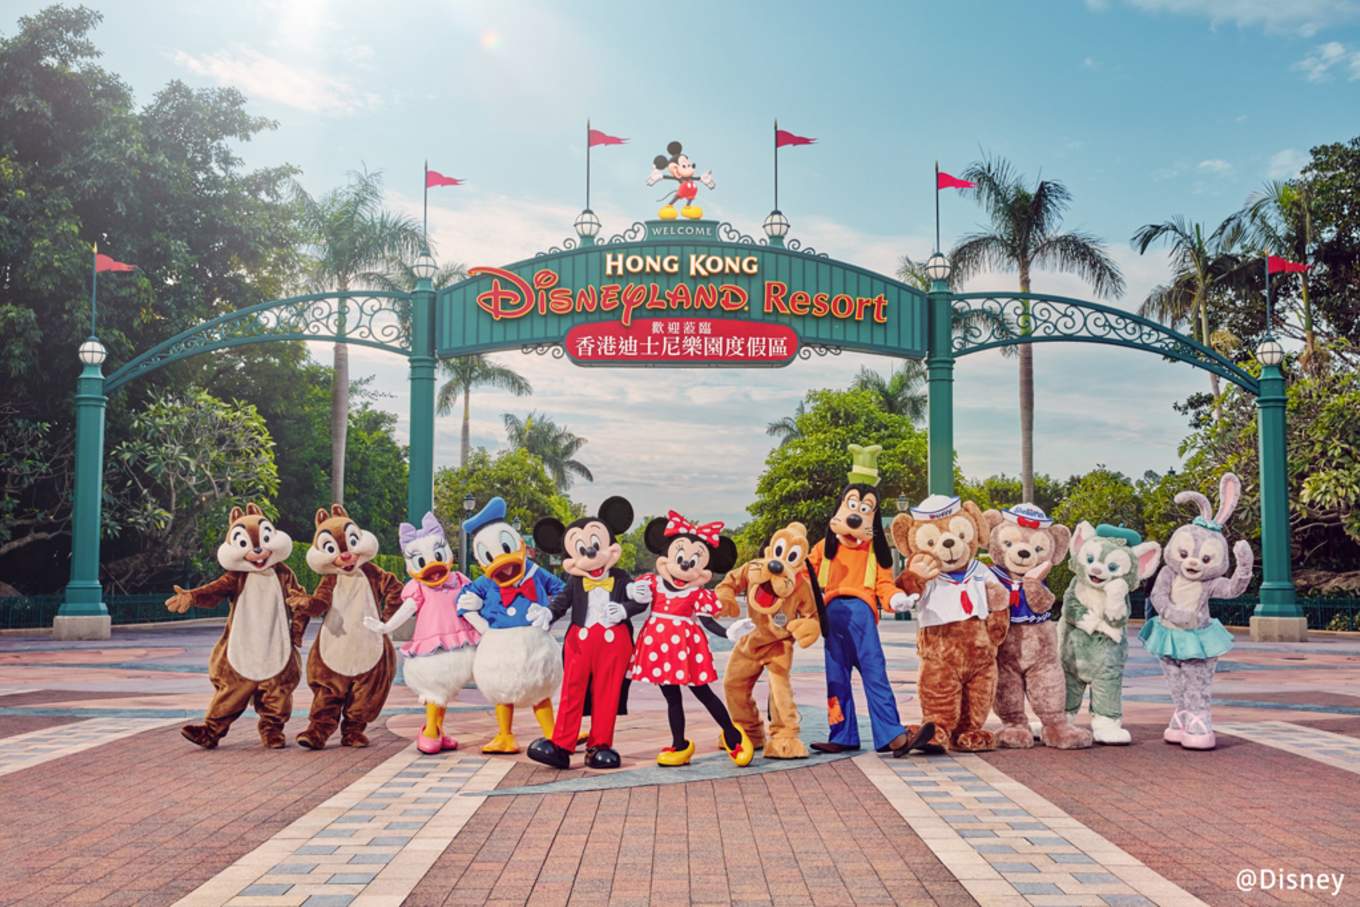 Hong Kong Disneyland To Close For 2 Weeks - The DisInsider